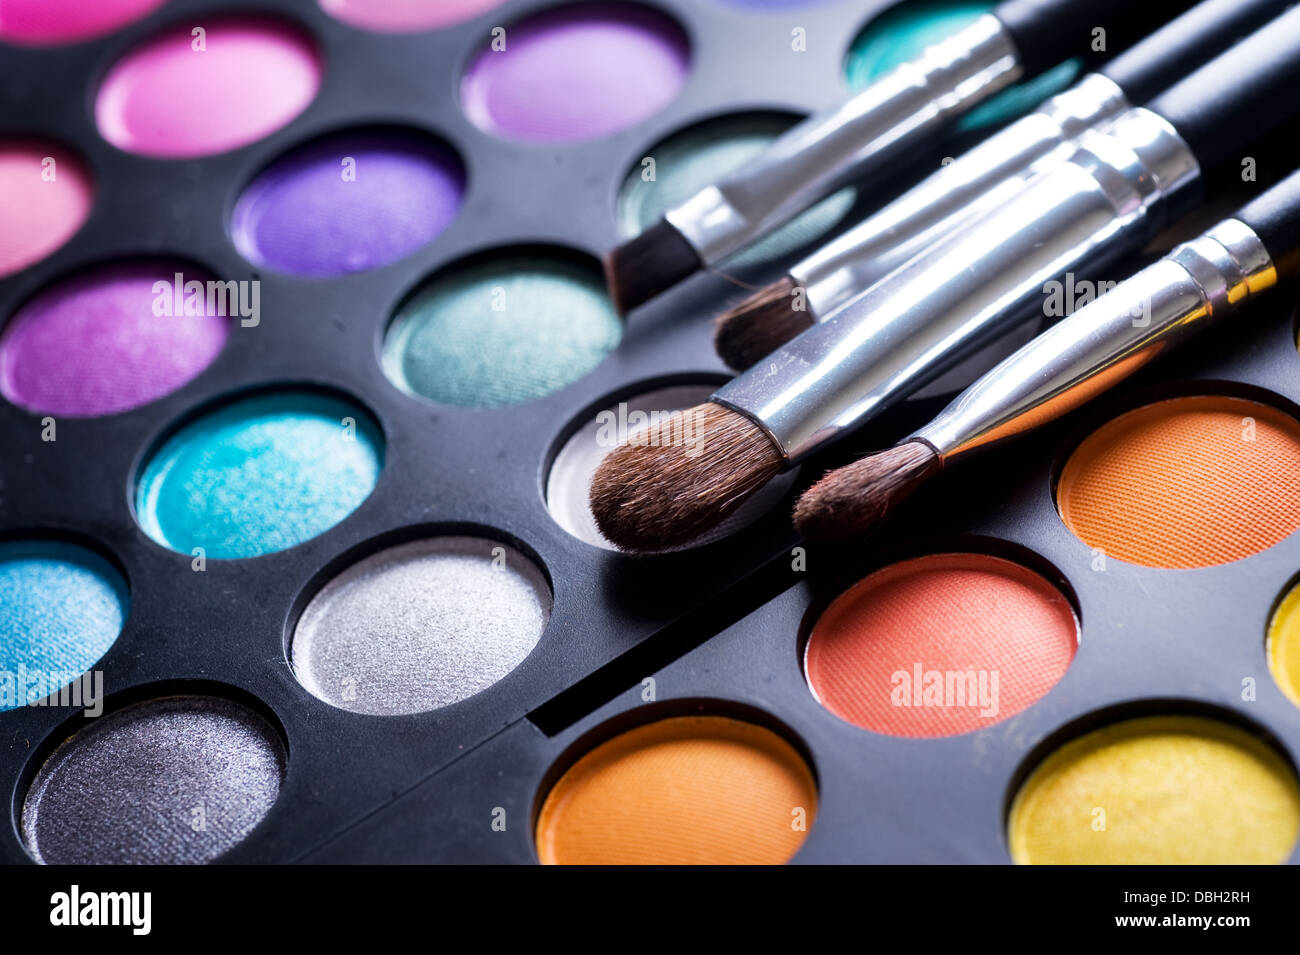 Makeup brushes and make-up eye shadows Stock Photo